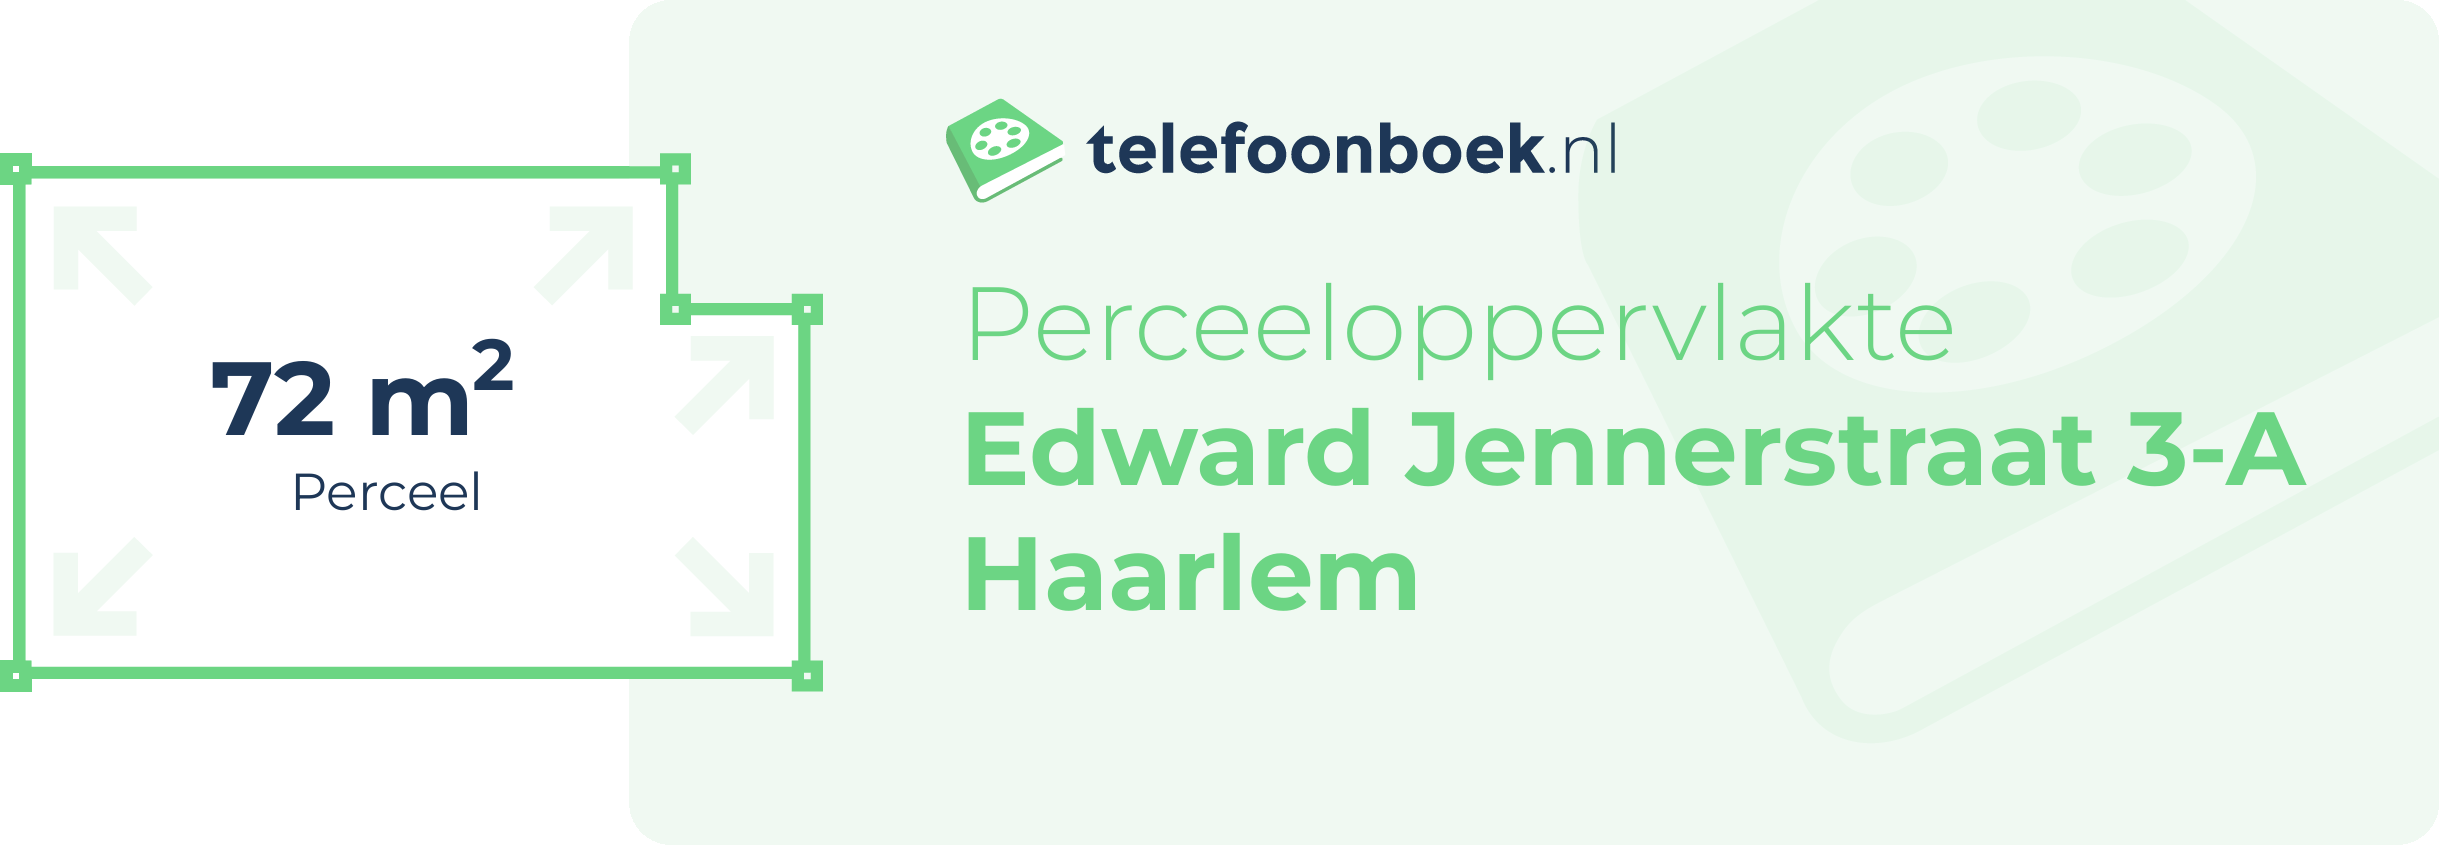 Perceeloppervlakte Edward Jennerstraat 3-A Haarlem